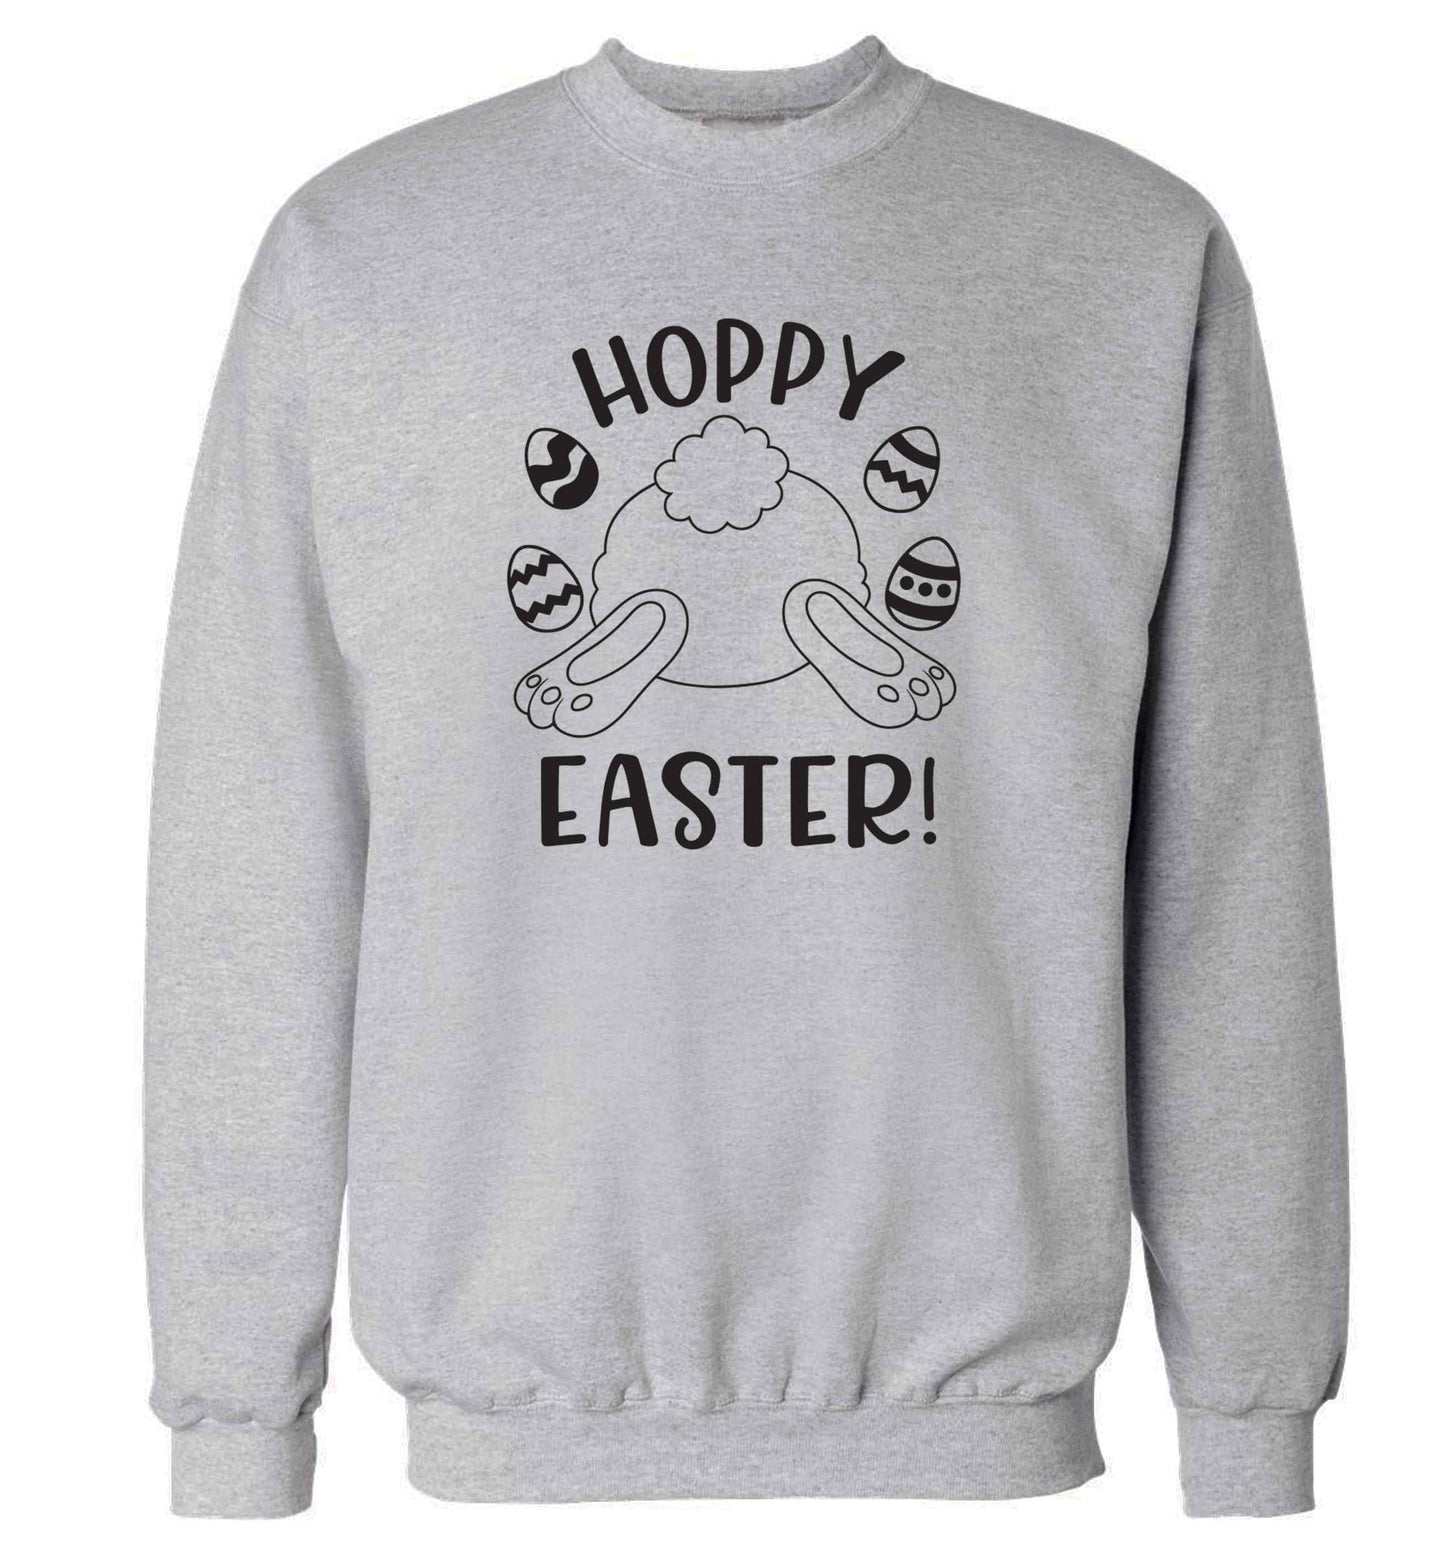 Hoppy Easter adult's unisex grey sweater 2XL